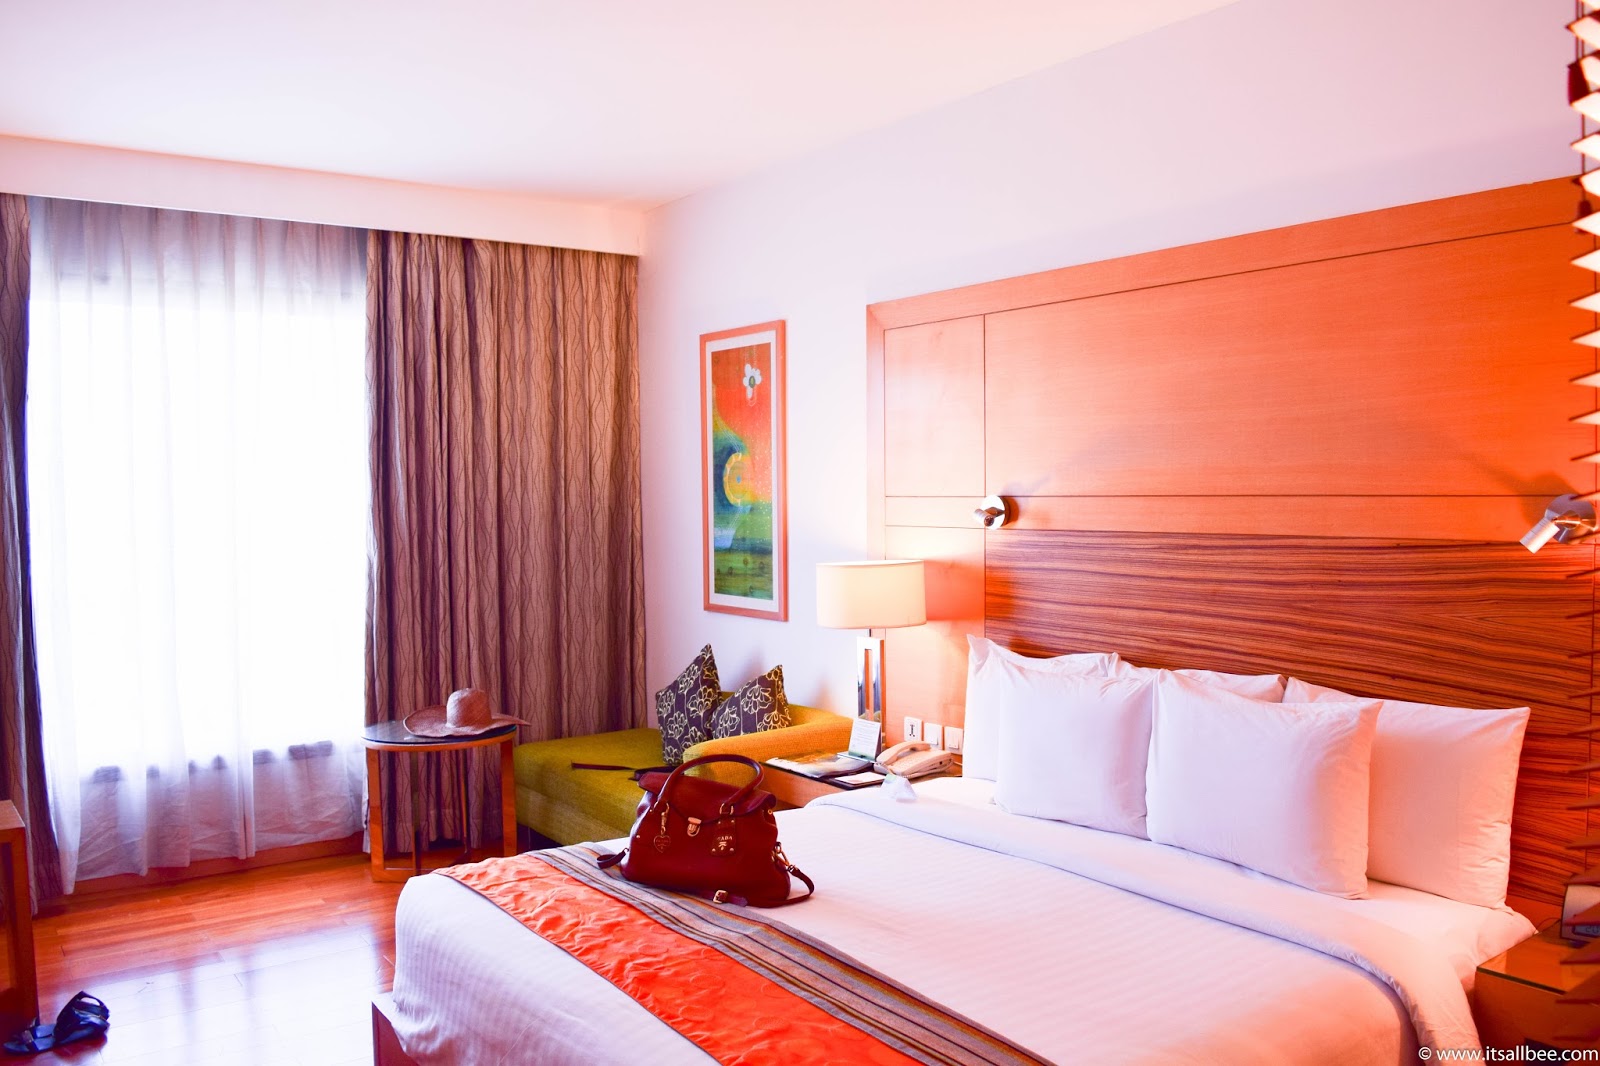 Marriott Courtyard Hotel | Where to Stay In New Delhi | Hotels in New Delhi